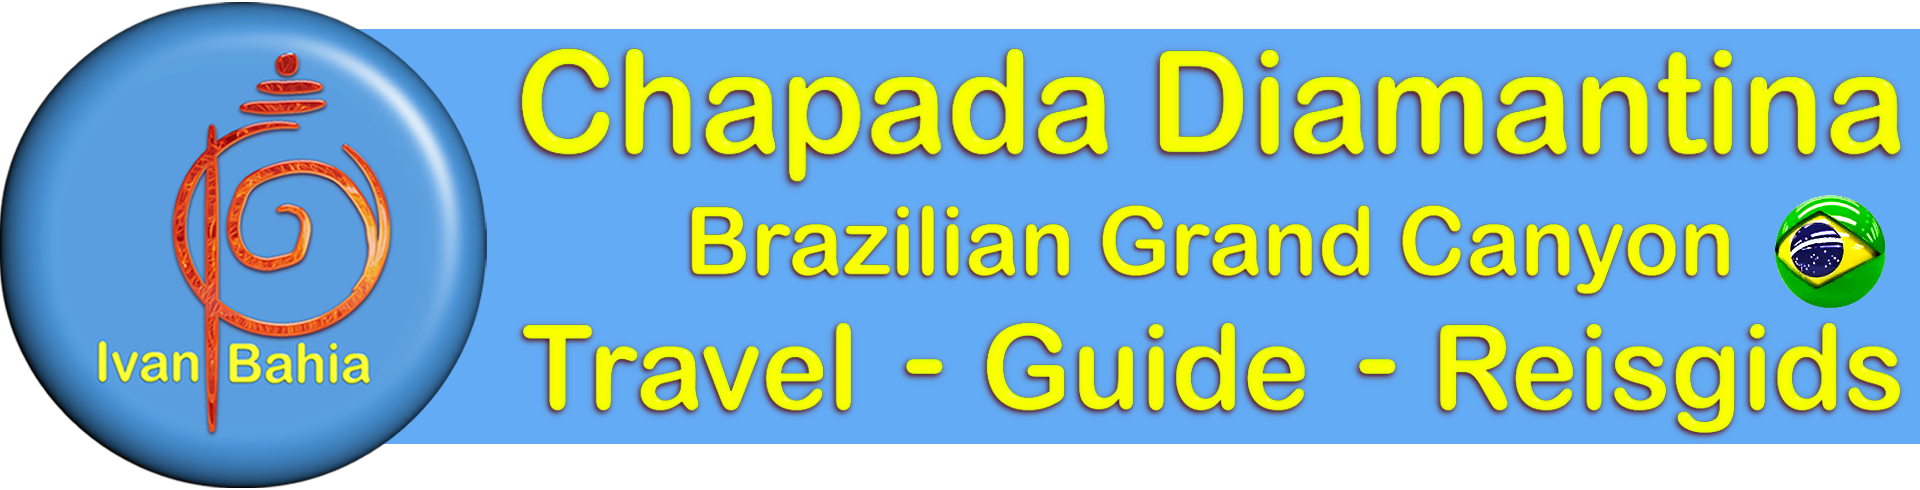 official Chapada Diamantina Mountain Guide in Bahia - Ivan Bahia Tour Guide & Travel Agency in Salvador, Brazil / Reis-gids, reis agentschap in Salvador da Bahia / #IvanBahiaGuide,#SalvadorBahiaBrazil,#Bresil,#BresilEssentiel,#BrazilEssential,#ChapadaDiamantina,#Brazilie,#ToursByLocals,#GayTravelBrazil,#IBG,#FotosBahia,#BahiaTourism,#SalvadorBahiaTravel,#FotosChapadaDiamantina,#fernandobingretourguide,#BrazilTravel,#ChapadaDiamantinaGuide,#ChapadaDiamantinaTrekking,#Chapadaadventure,#BahiaMetisse,#BahiaGuide,#diamantinamountains,#DiamondMountains,#ValedoPati,#PatyValley,#ValeCapao,#Bahia,#Lençois,#MorroPaiInacio